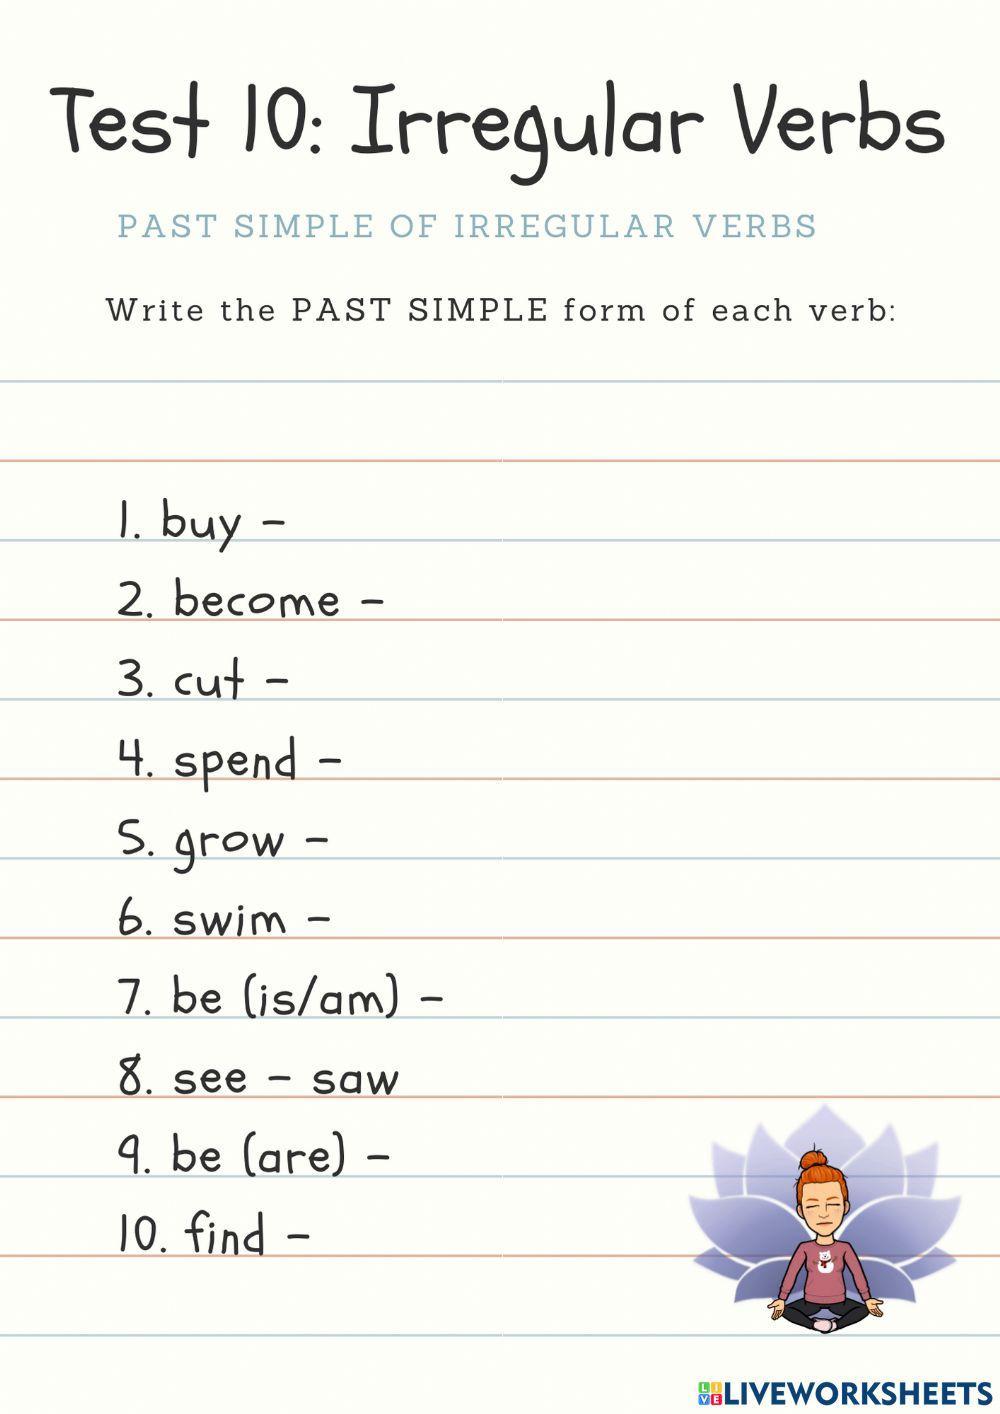 Irregular Verb Past Simple Test (10)